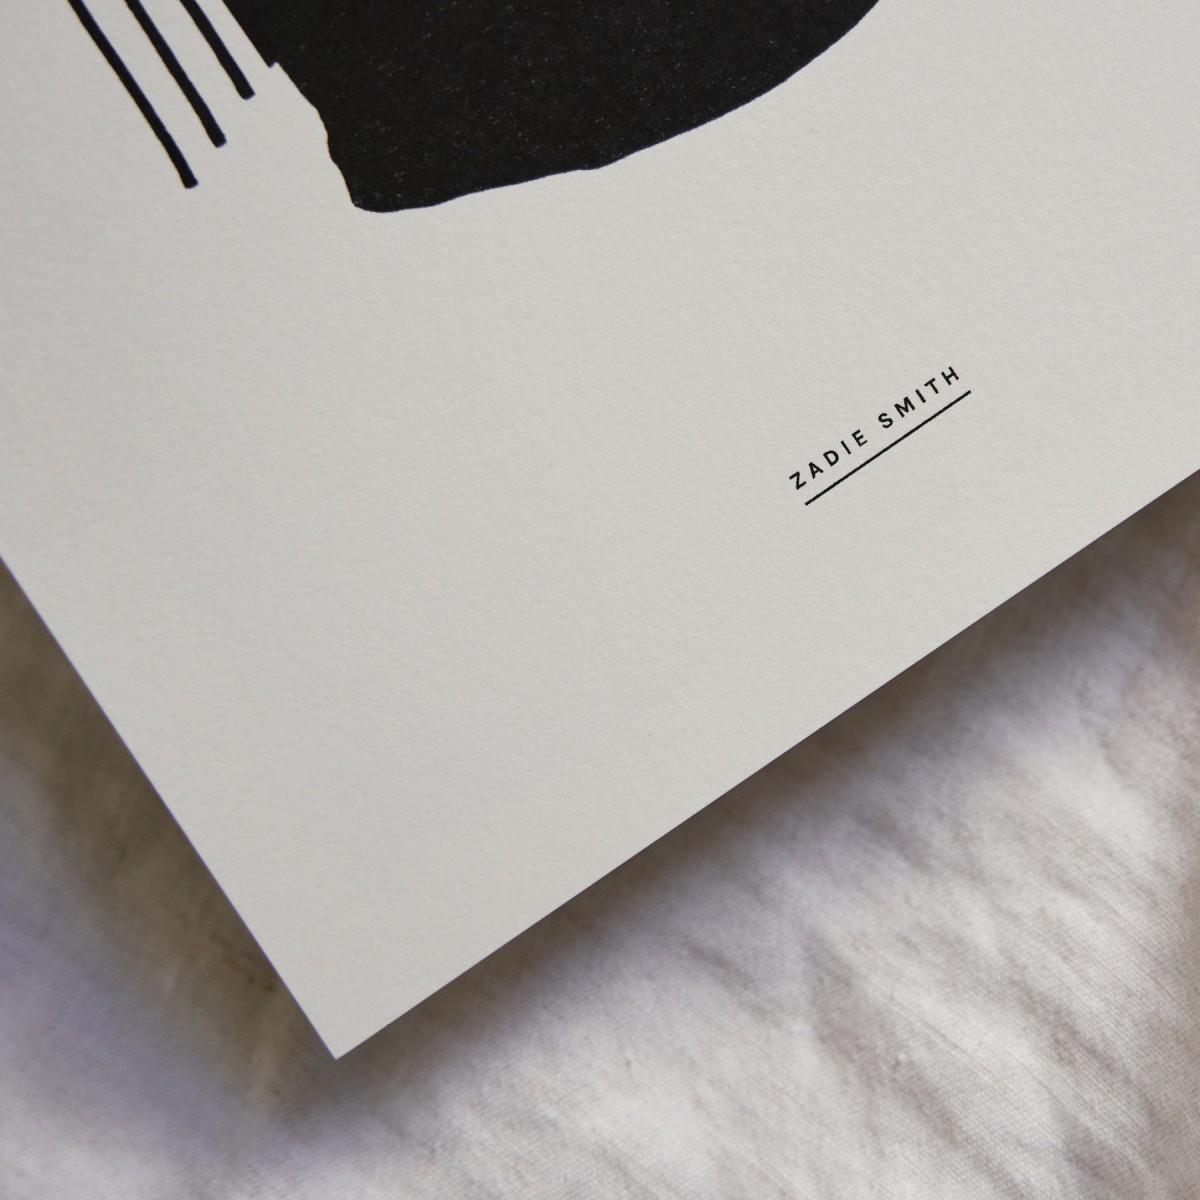 Zadie Smith – Art Print – Inspiring women in history Edition